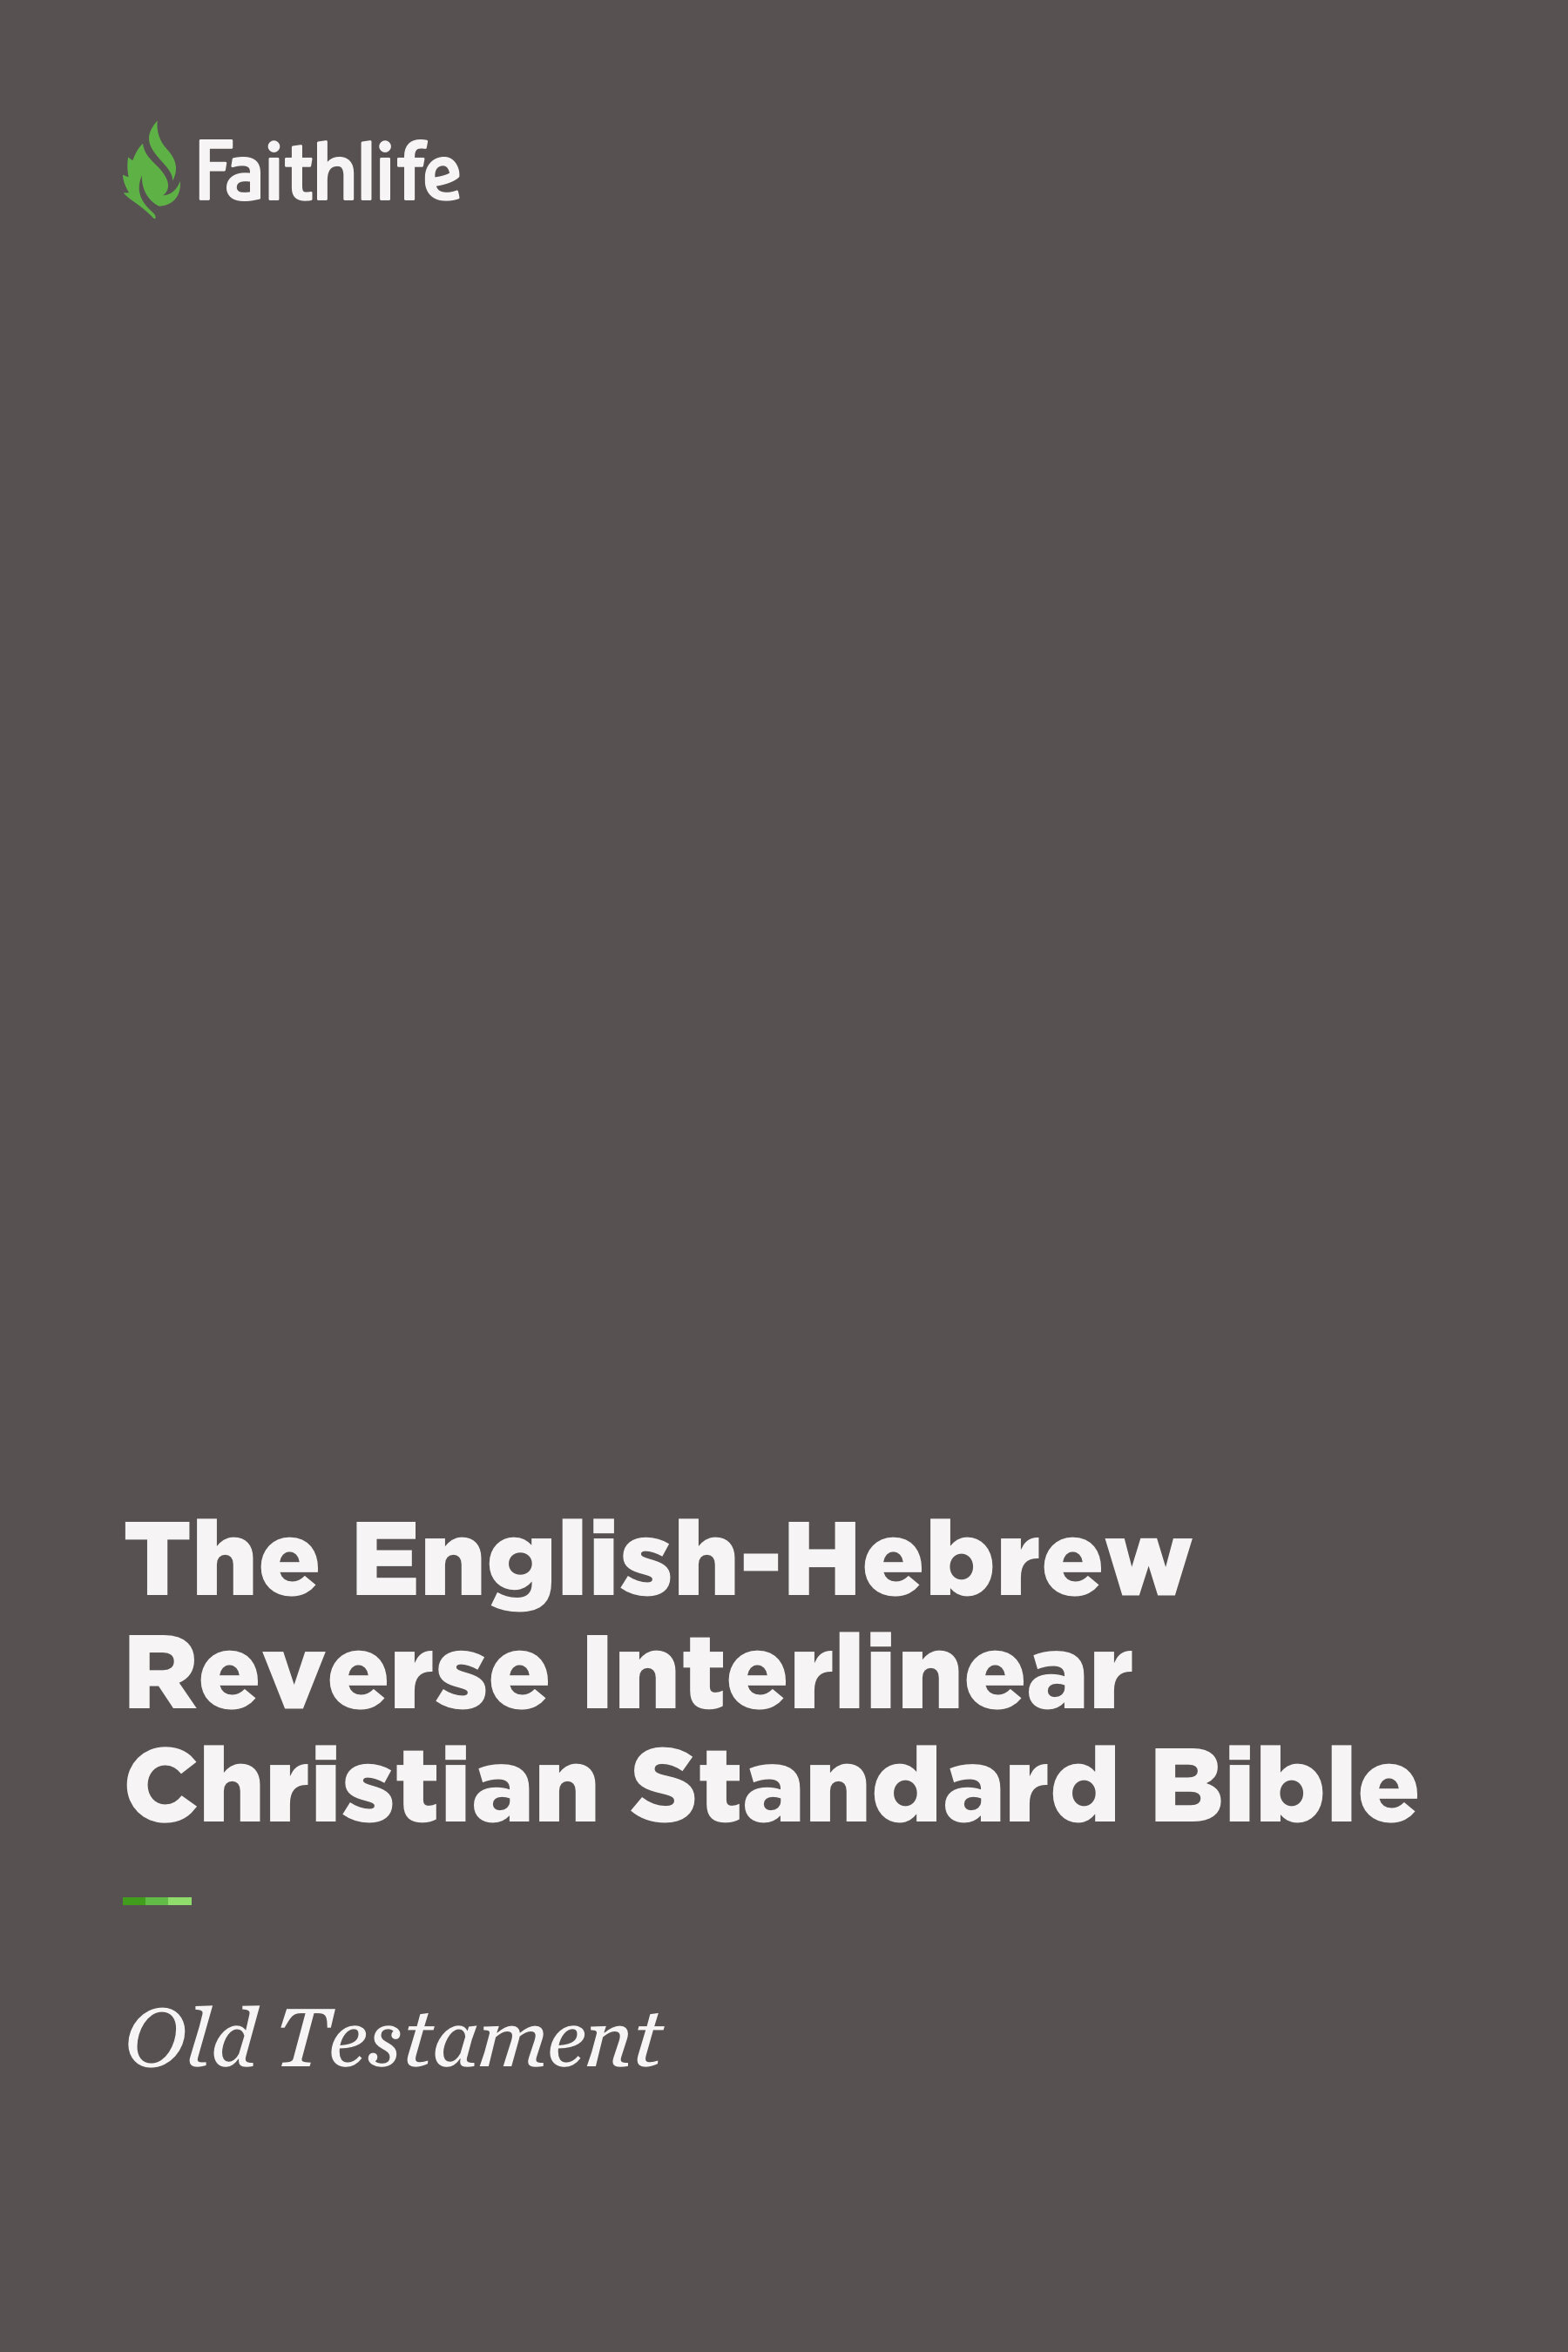 The English-Hebrew Reverse Interlinear Christian Standard Bible: Old Testament